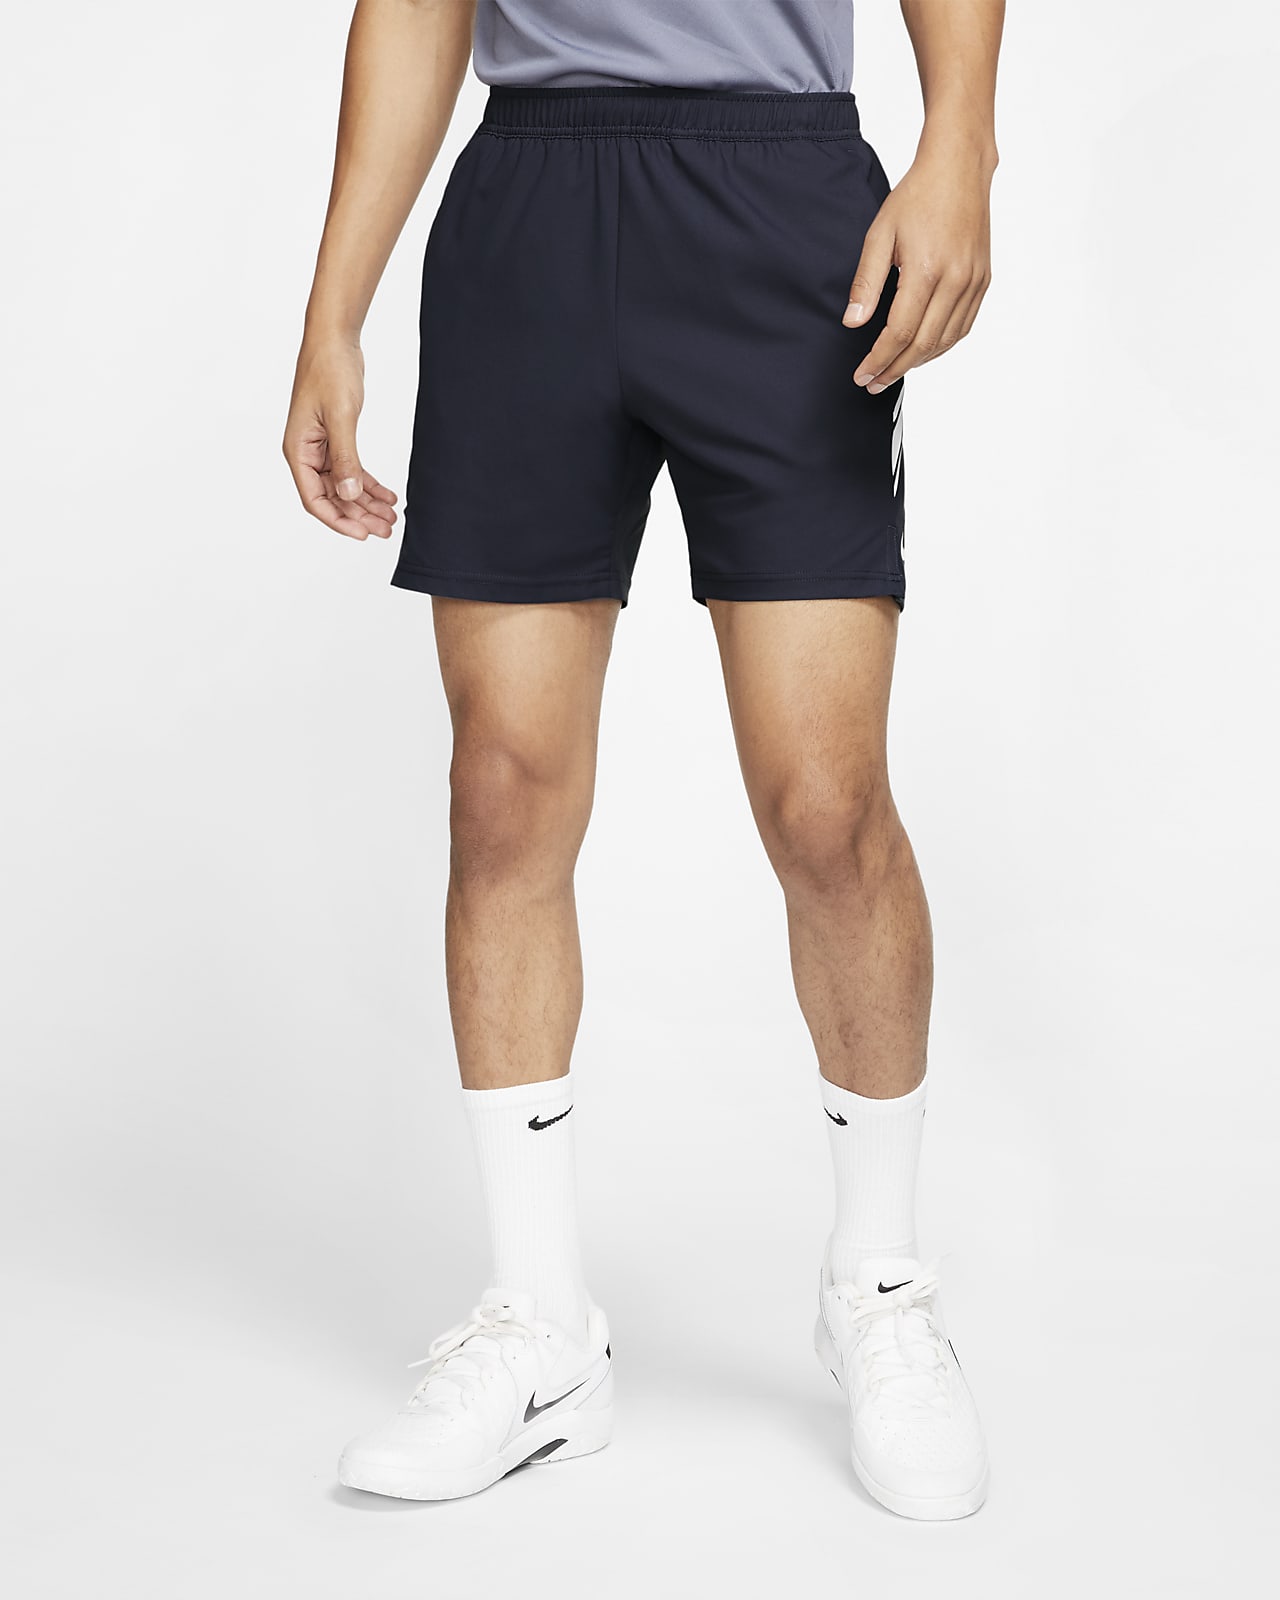 nike white tennis shorts mens